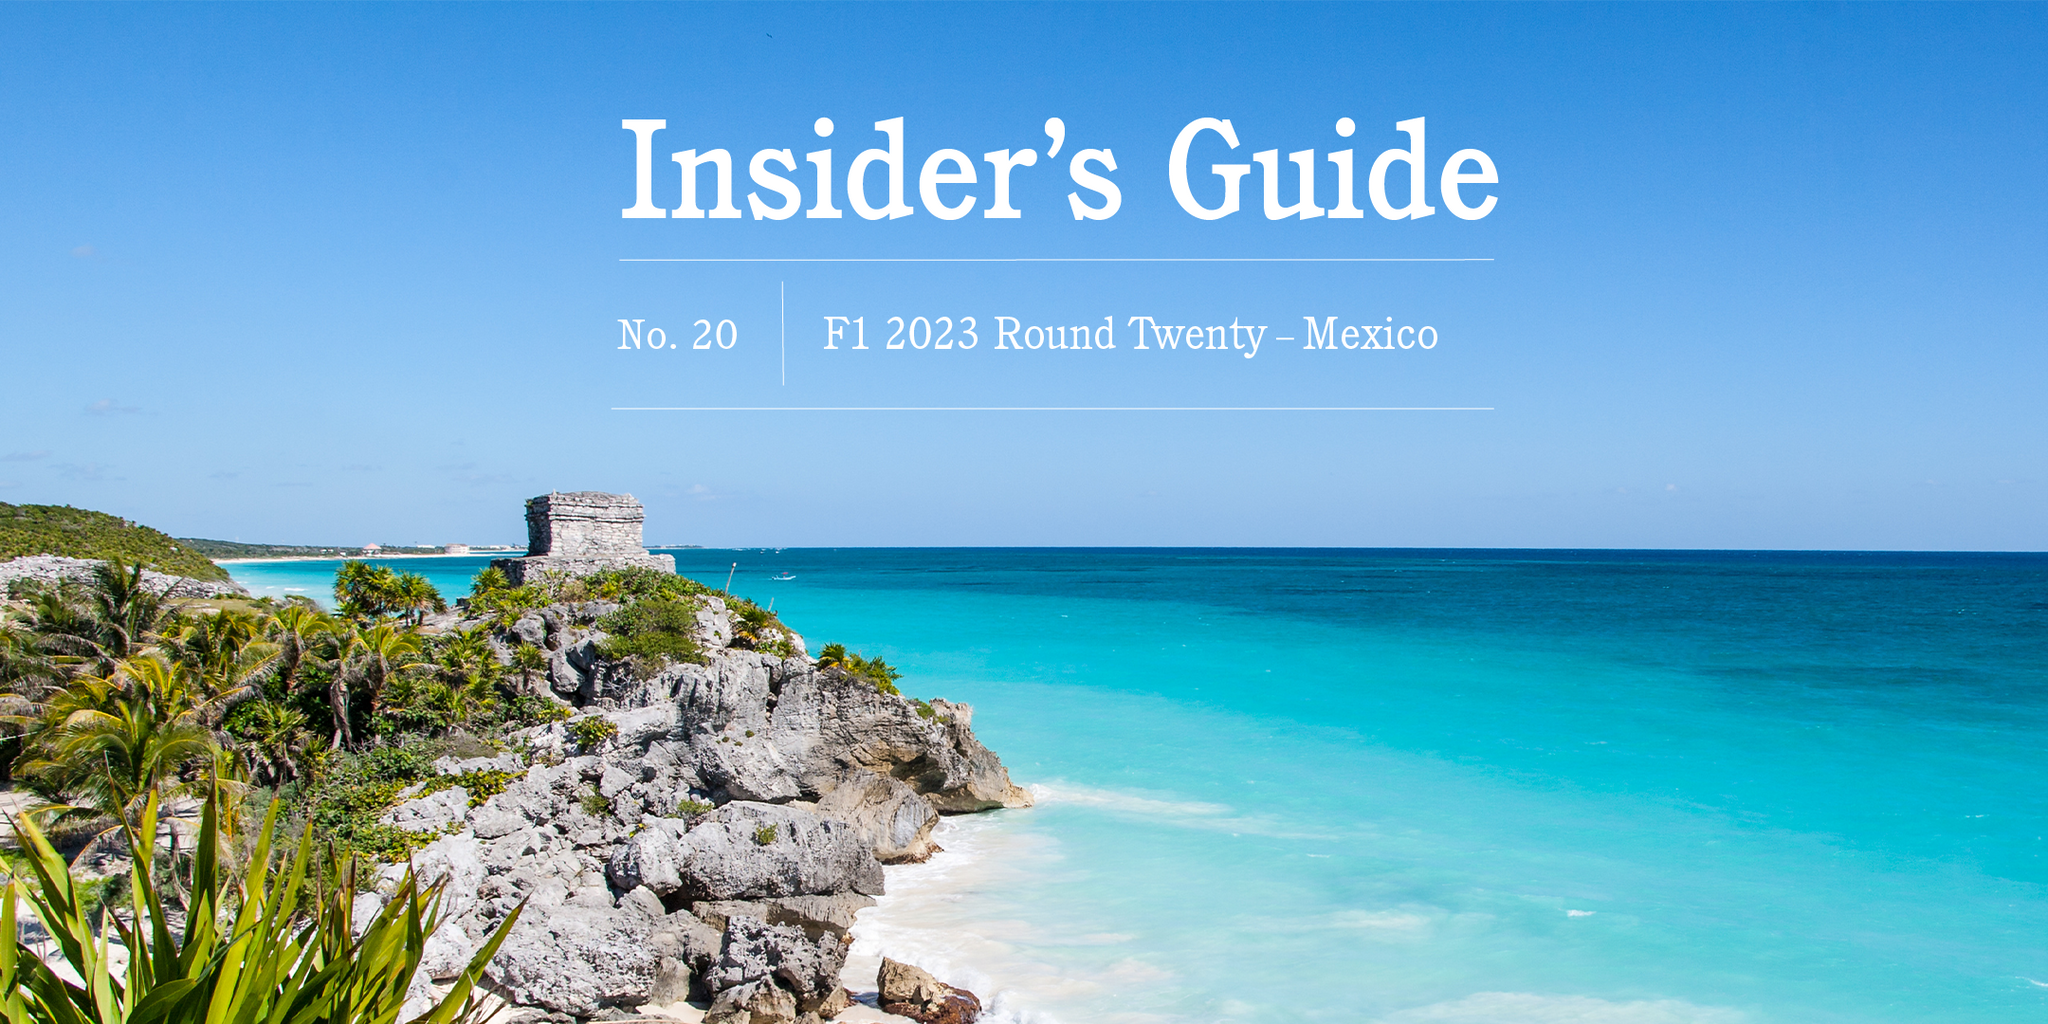 F1 2023 Insider’s Guide No. 20 – Mexico - GLOBE-TROTTER